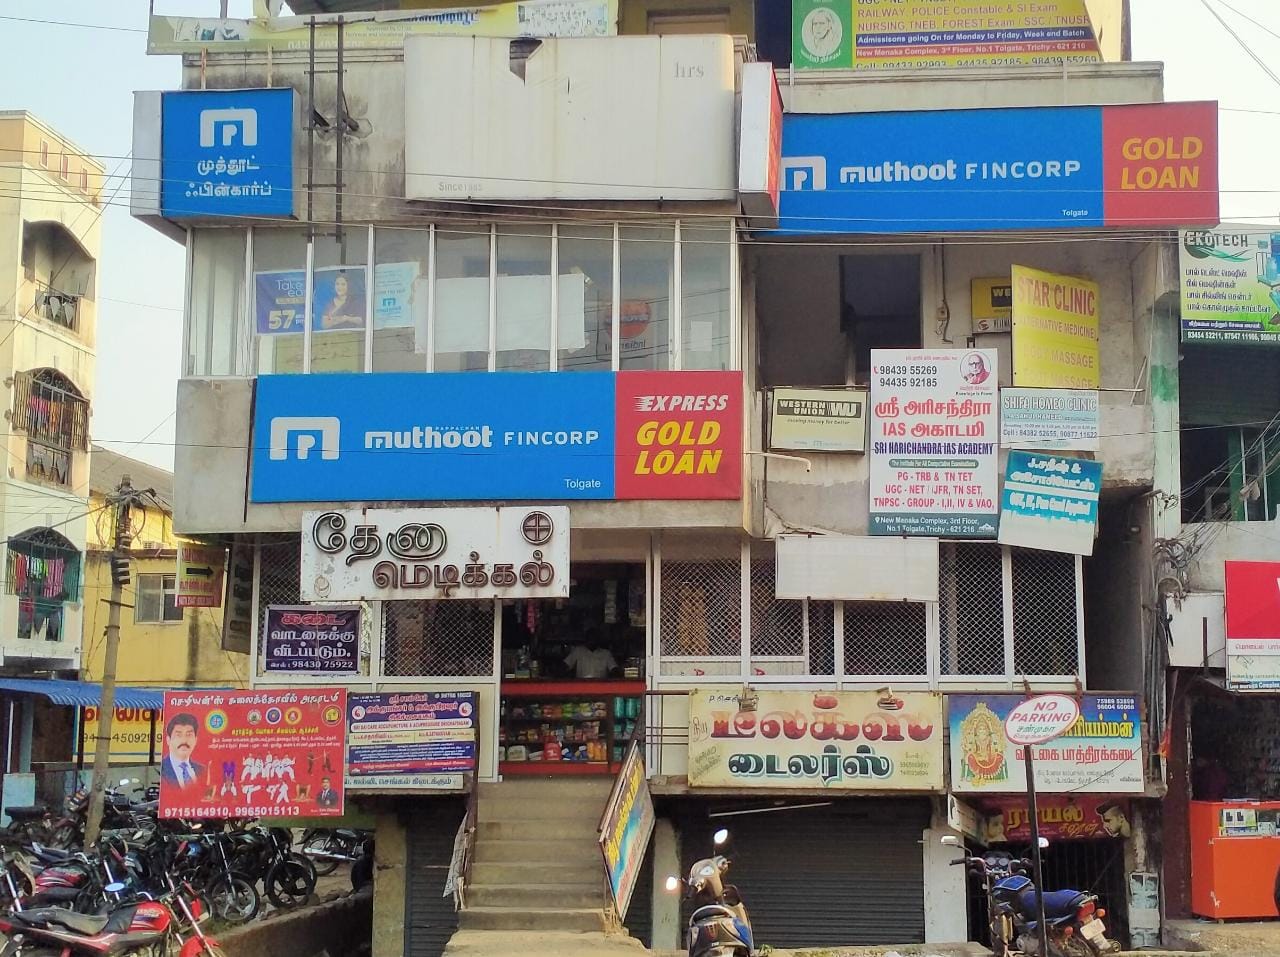 Muthoot Fincorp Gold Loan Services in Lalgudi Main Road, Tiruchirappalli, Tamil Nadu